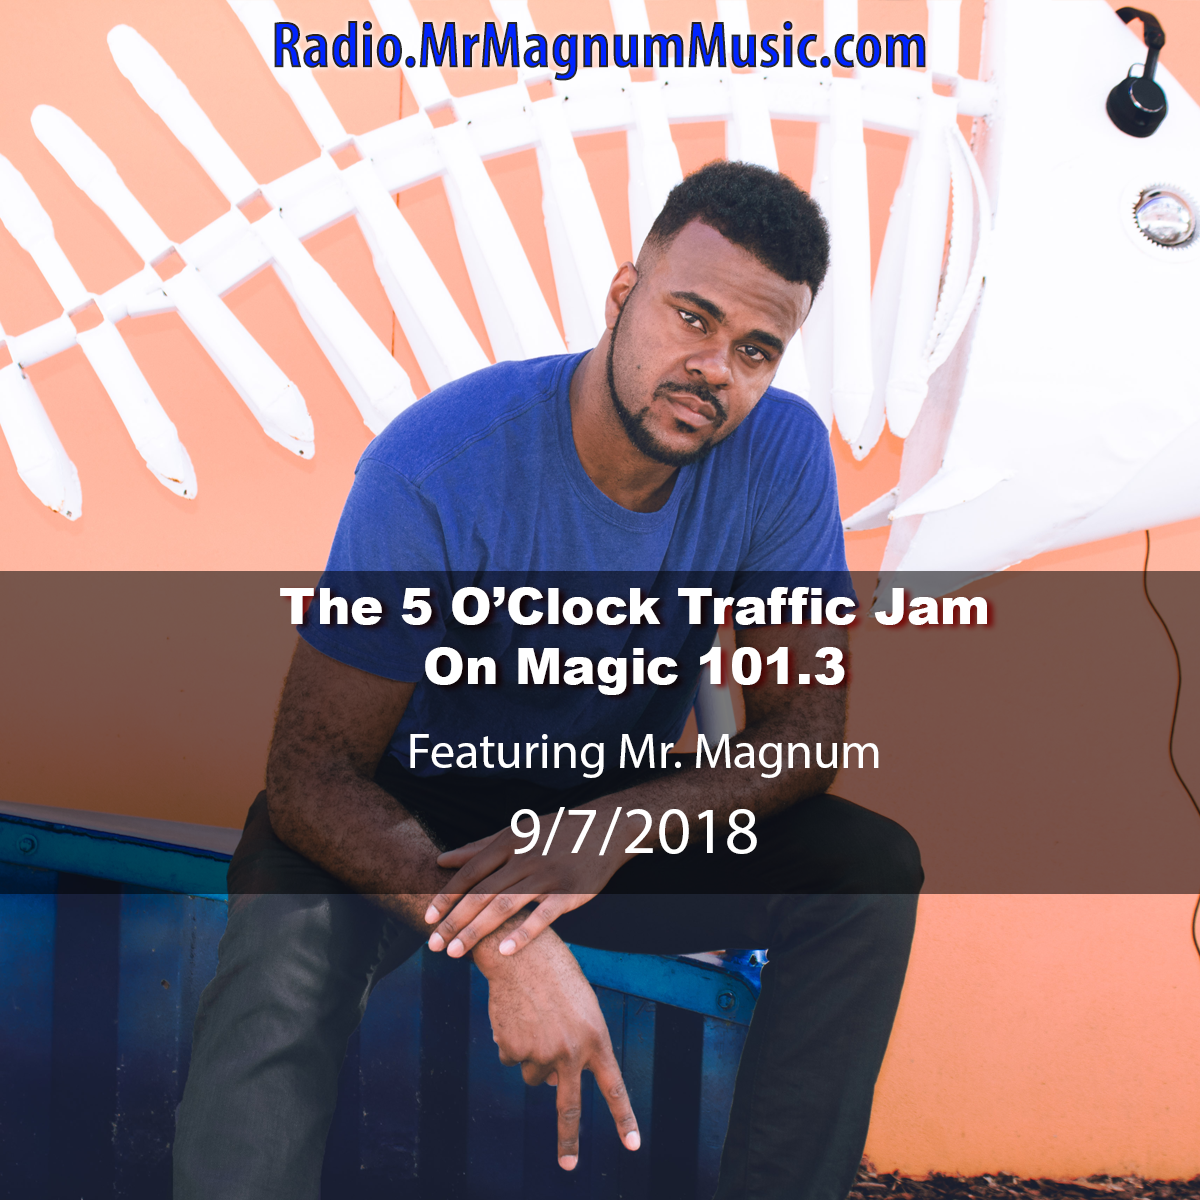 The 5 O'Clock Traffic Jam 20180907 featuring Gainesville's #1 DJ, Mr. Magnum on Magic 101.3